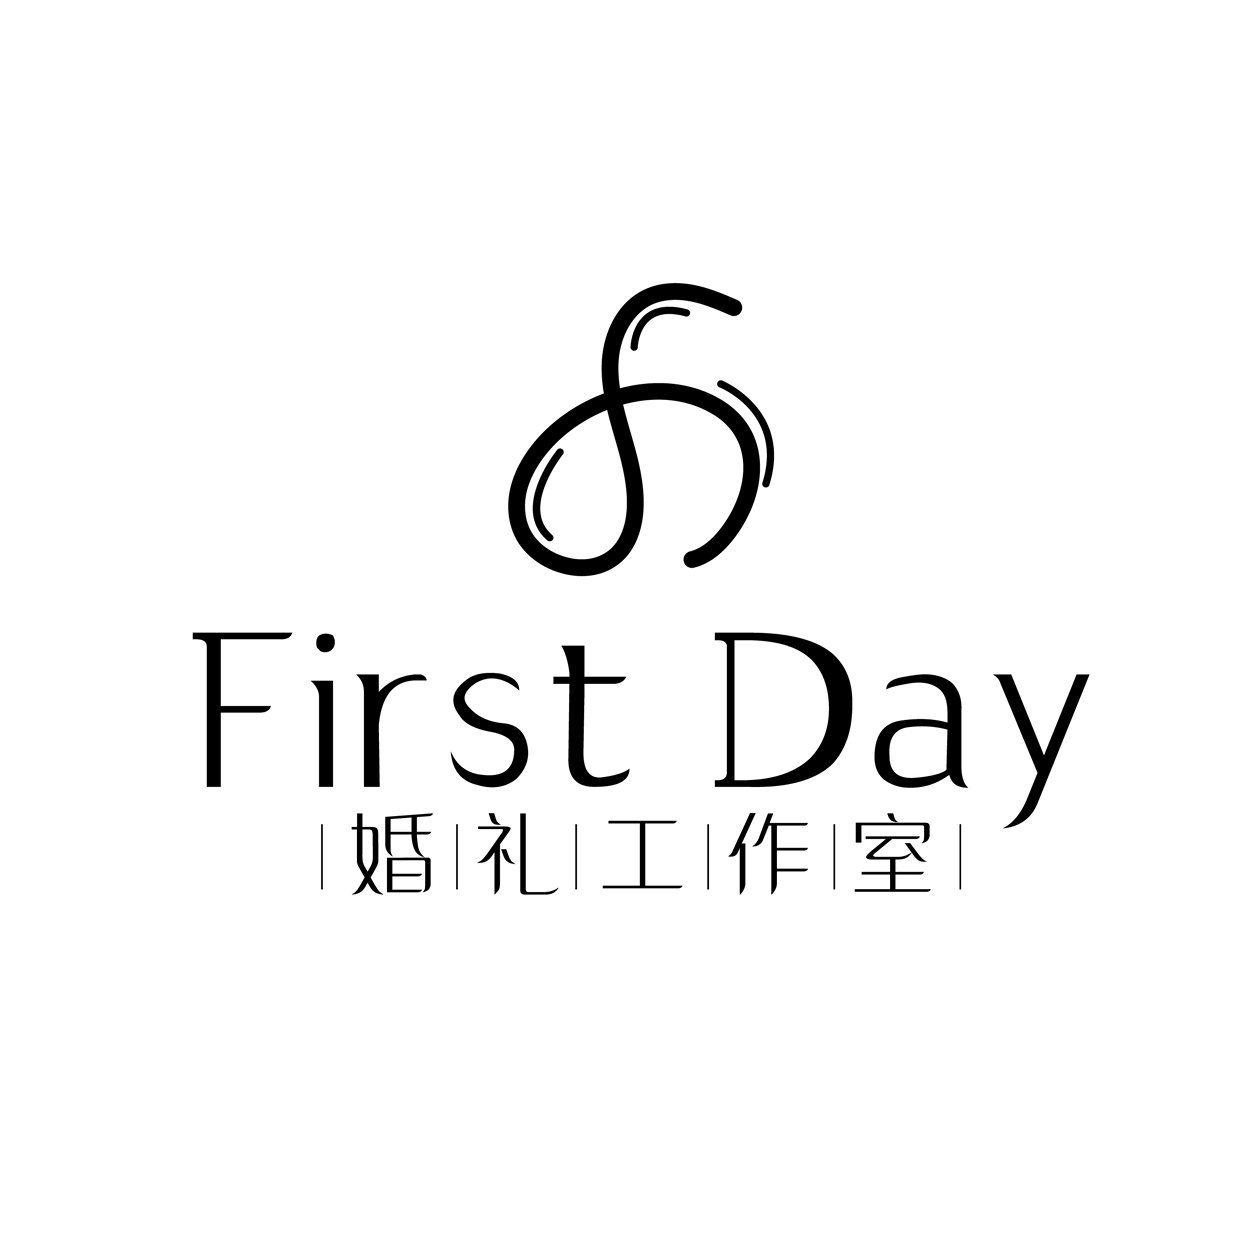 First day第一天